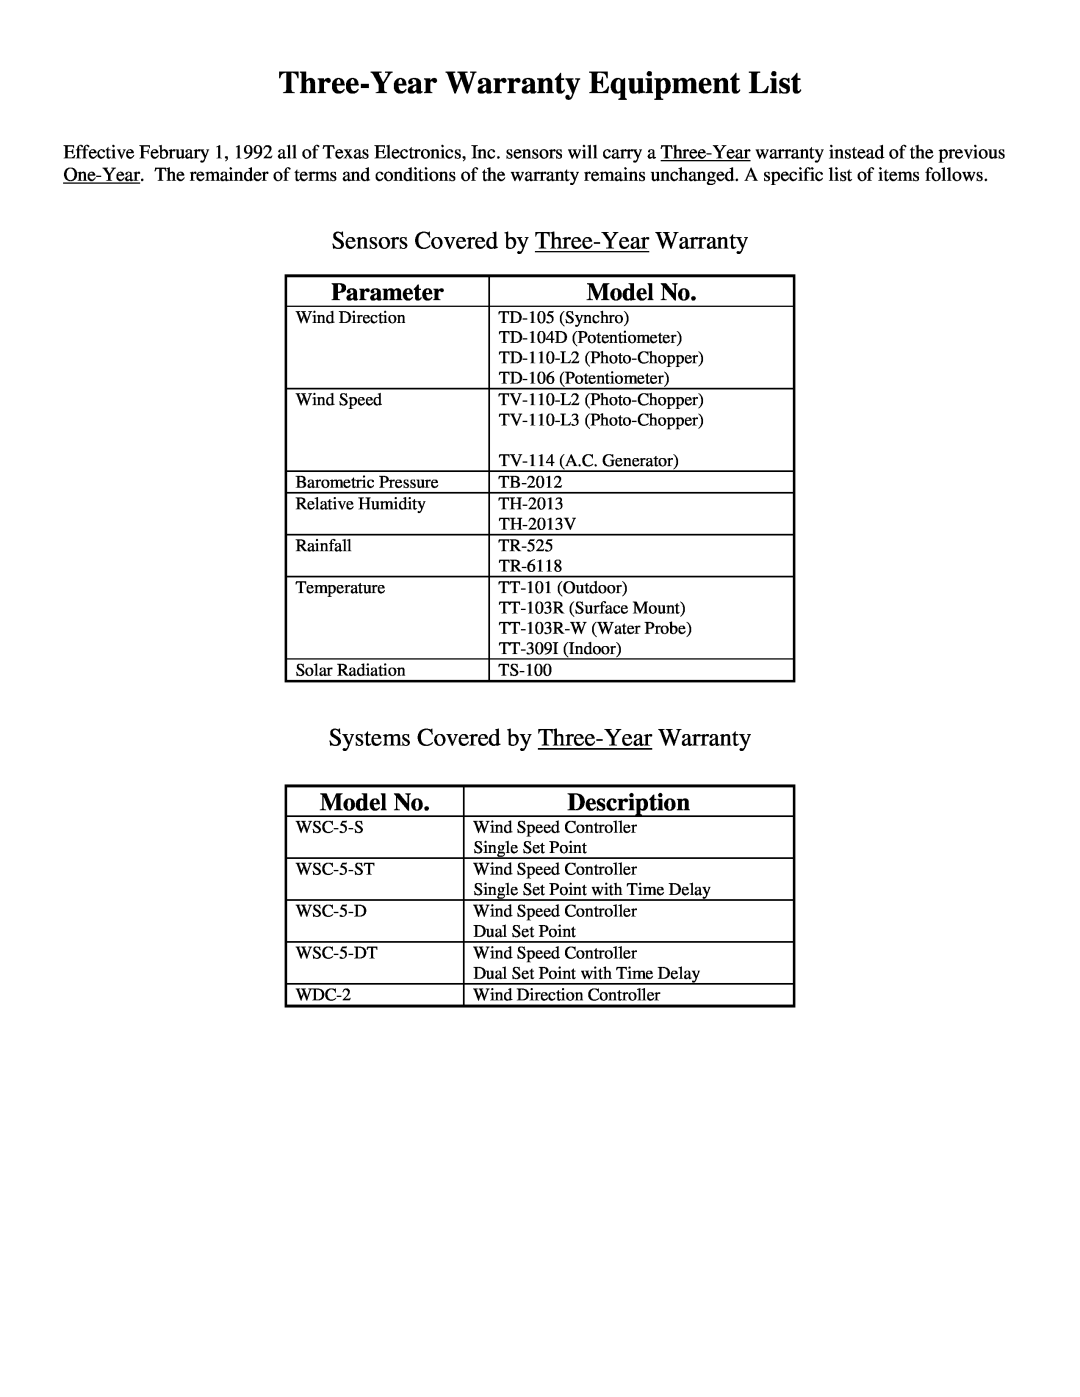 Texas Instruments TR-525I, TR-525USW user manual Parameter, Model No, Description, Three-YearWarranty Equipment List 